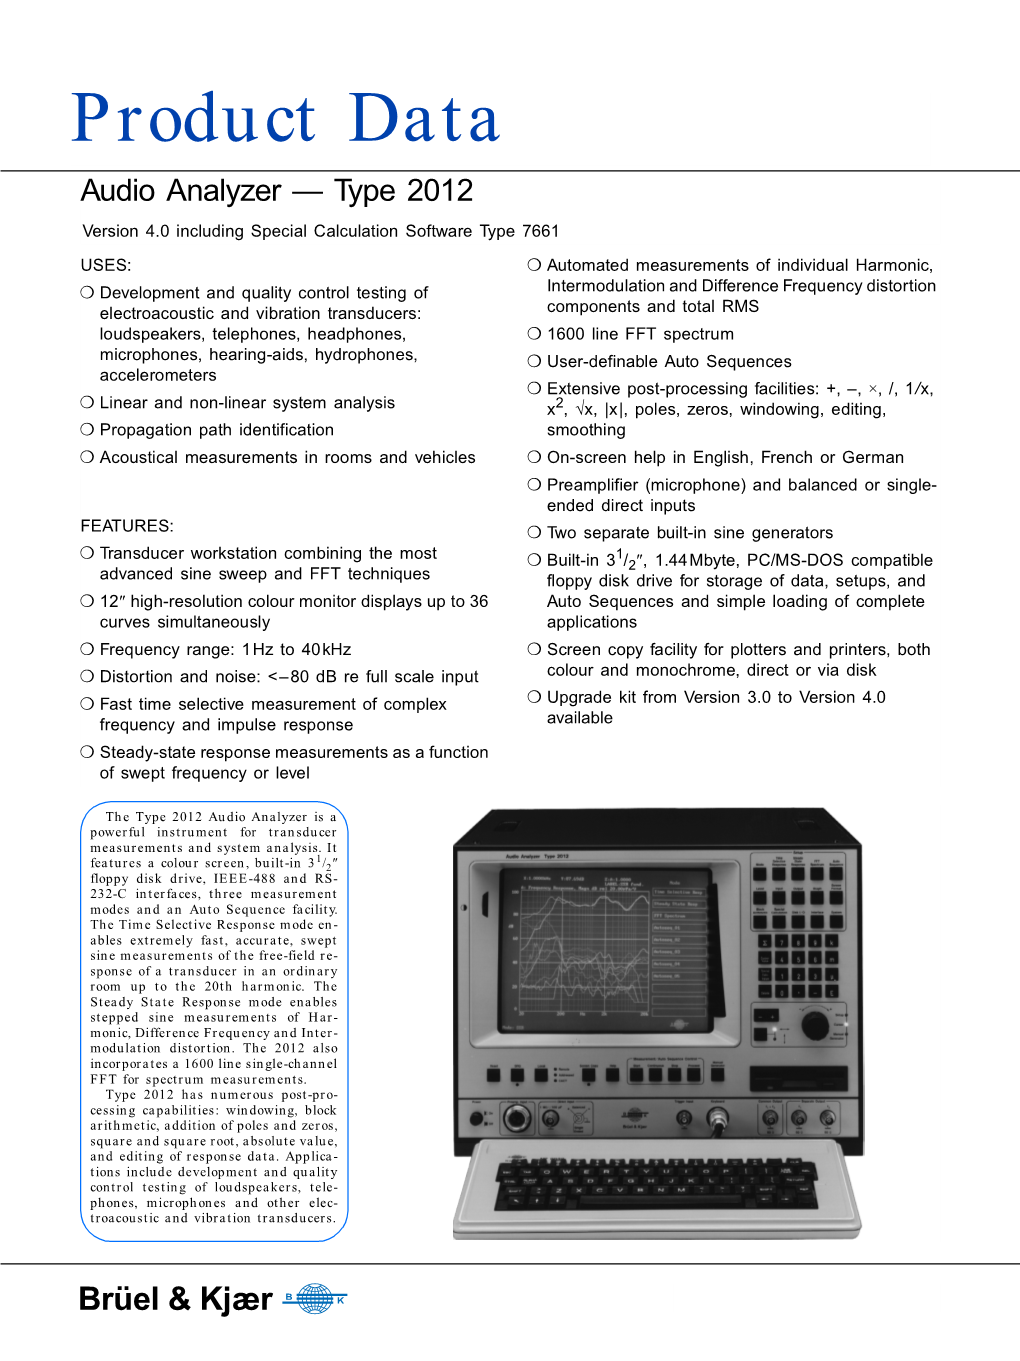 Audio Analyzer Type 2012 (Bp1503)